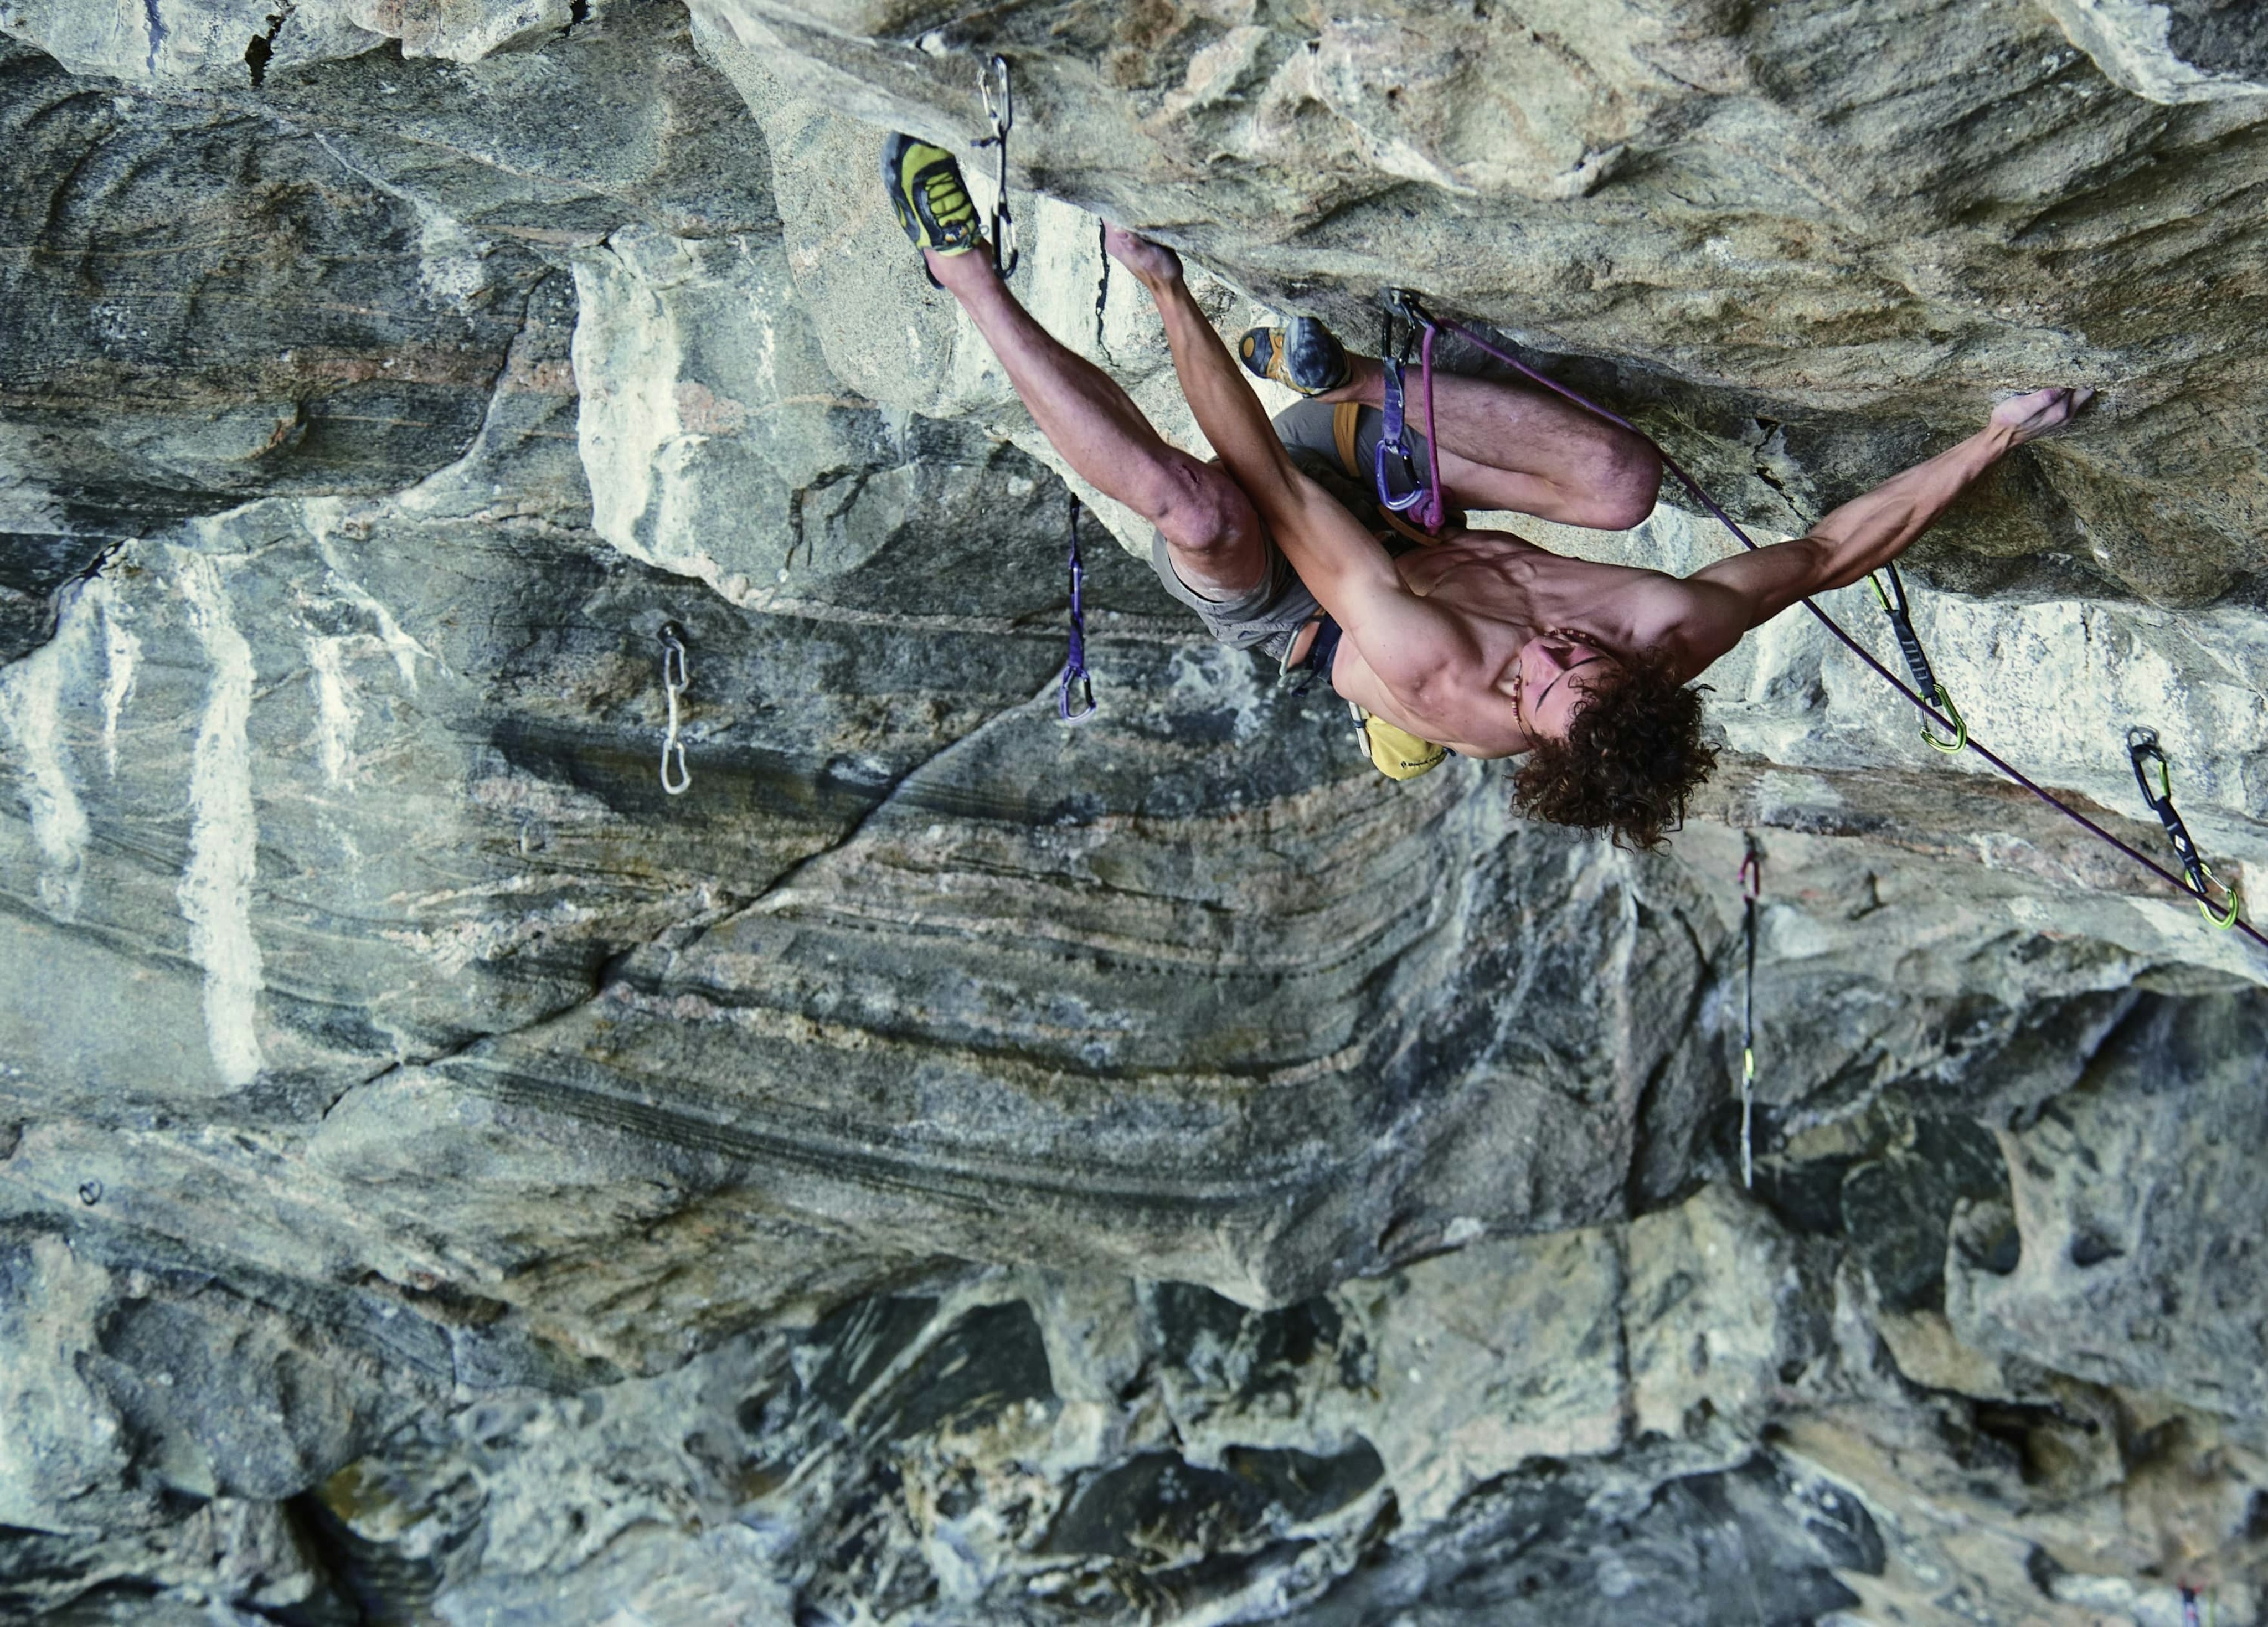 Adam Ondra climbs